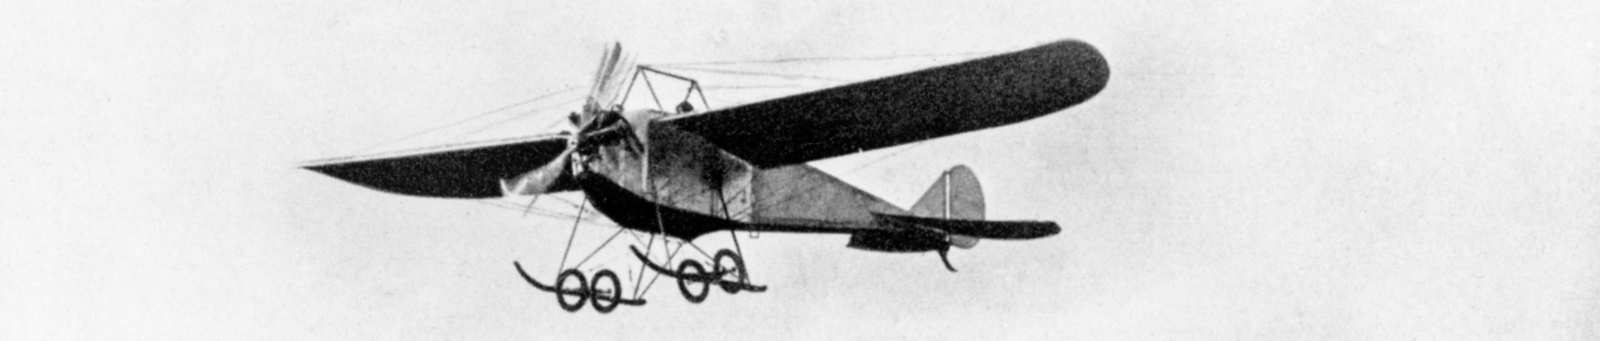 Vickers No 5 Monoplane